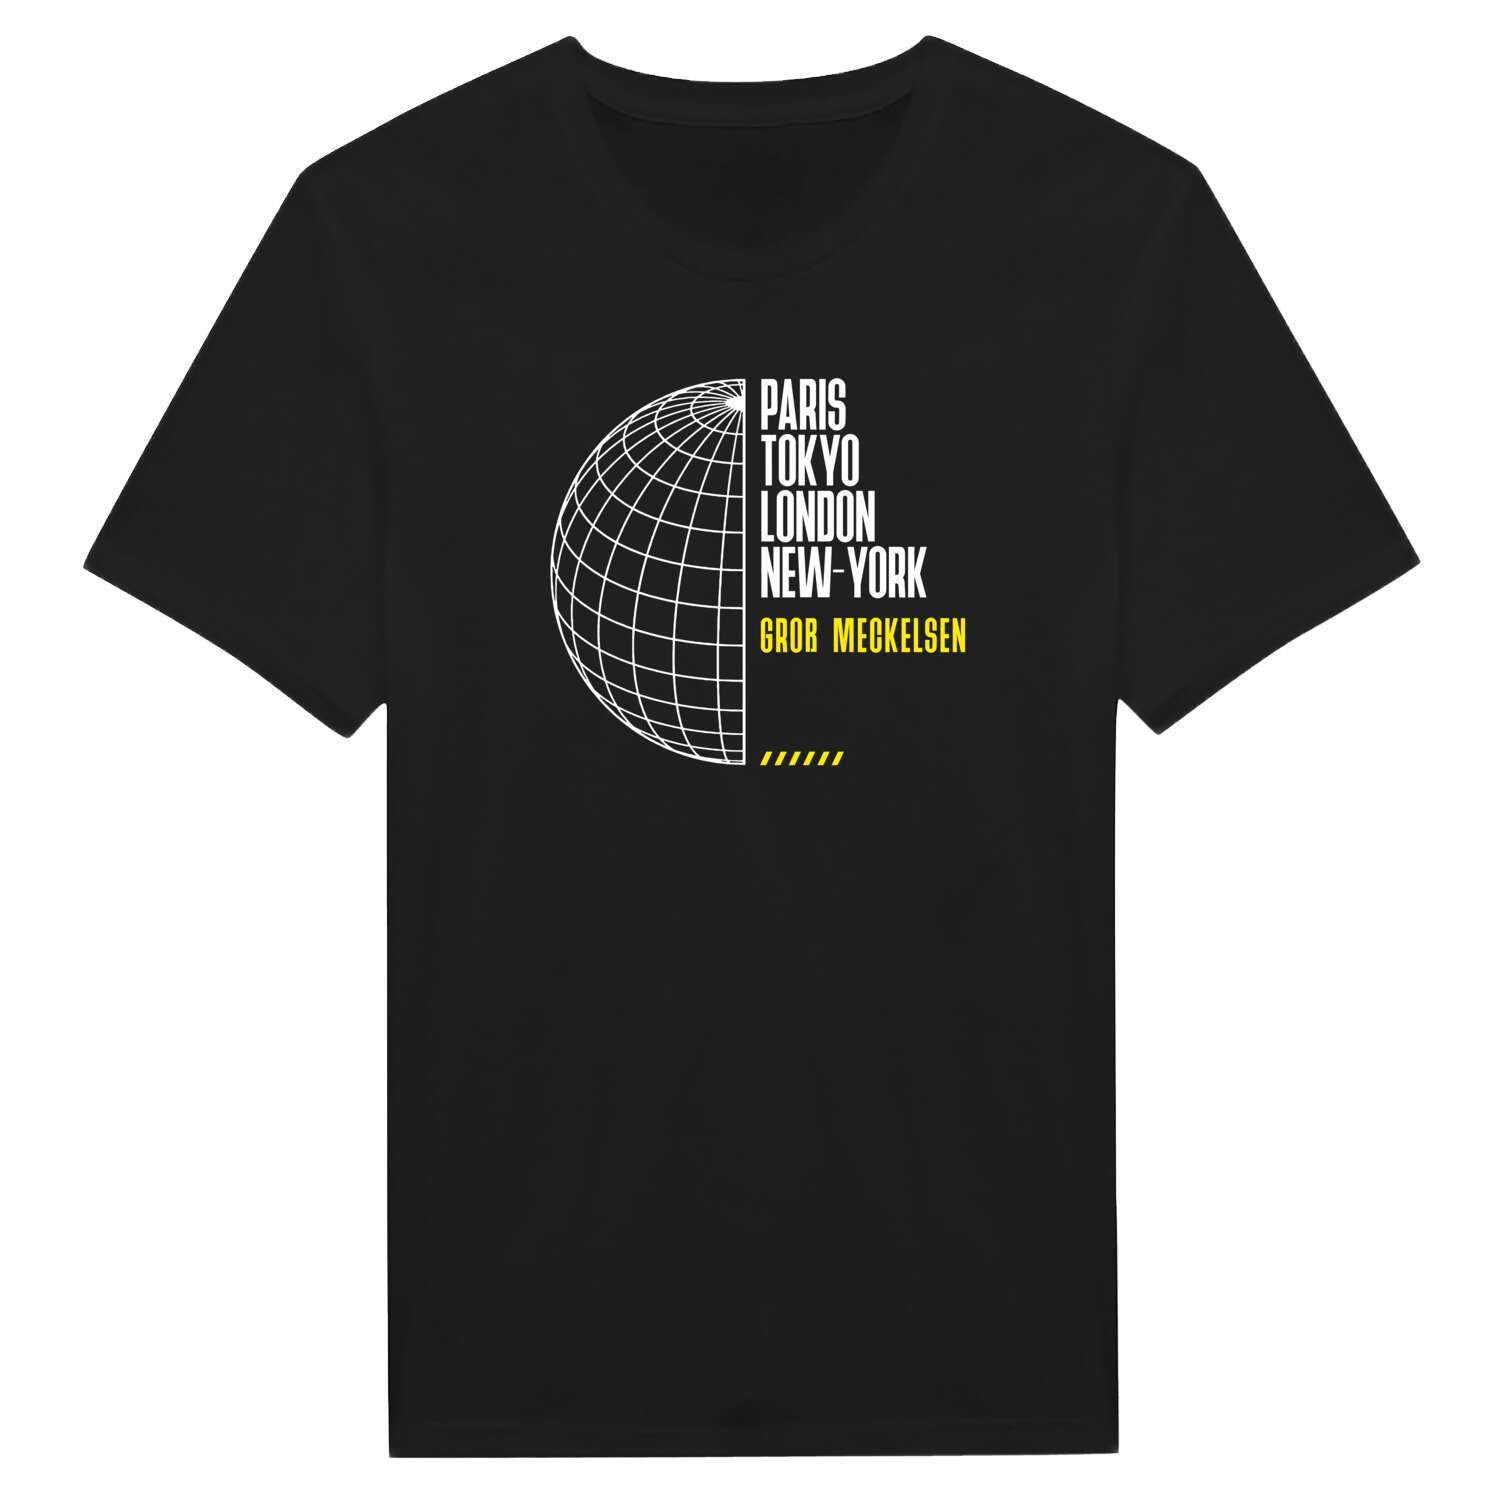 Groß Meckelsen T-Shirt »Paris Tokyo London«